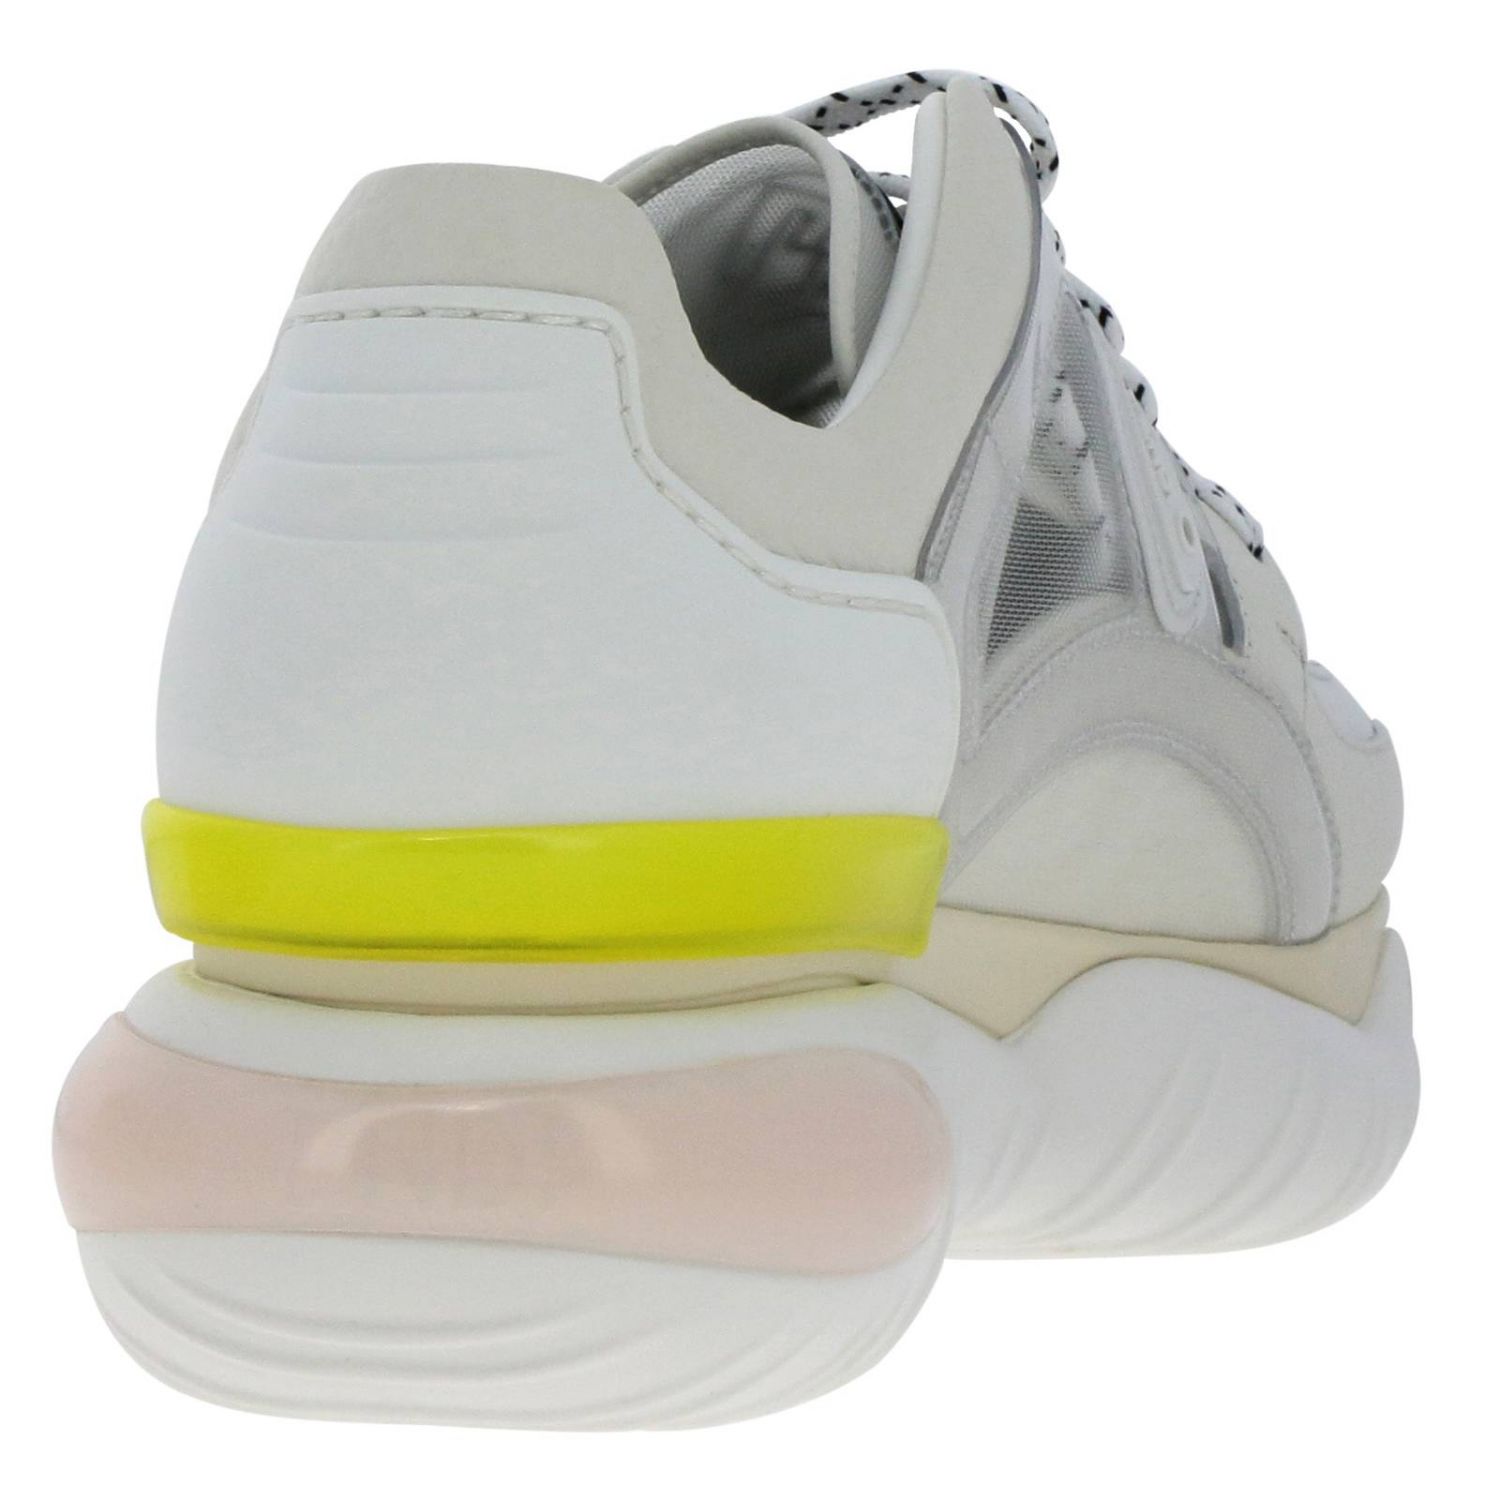 Shoes women Fendi | Sneakers Fendi Women White | Sneakers Fendi 8E6791 ...